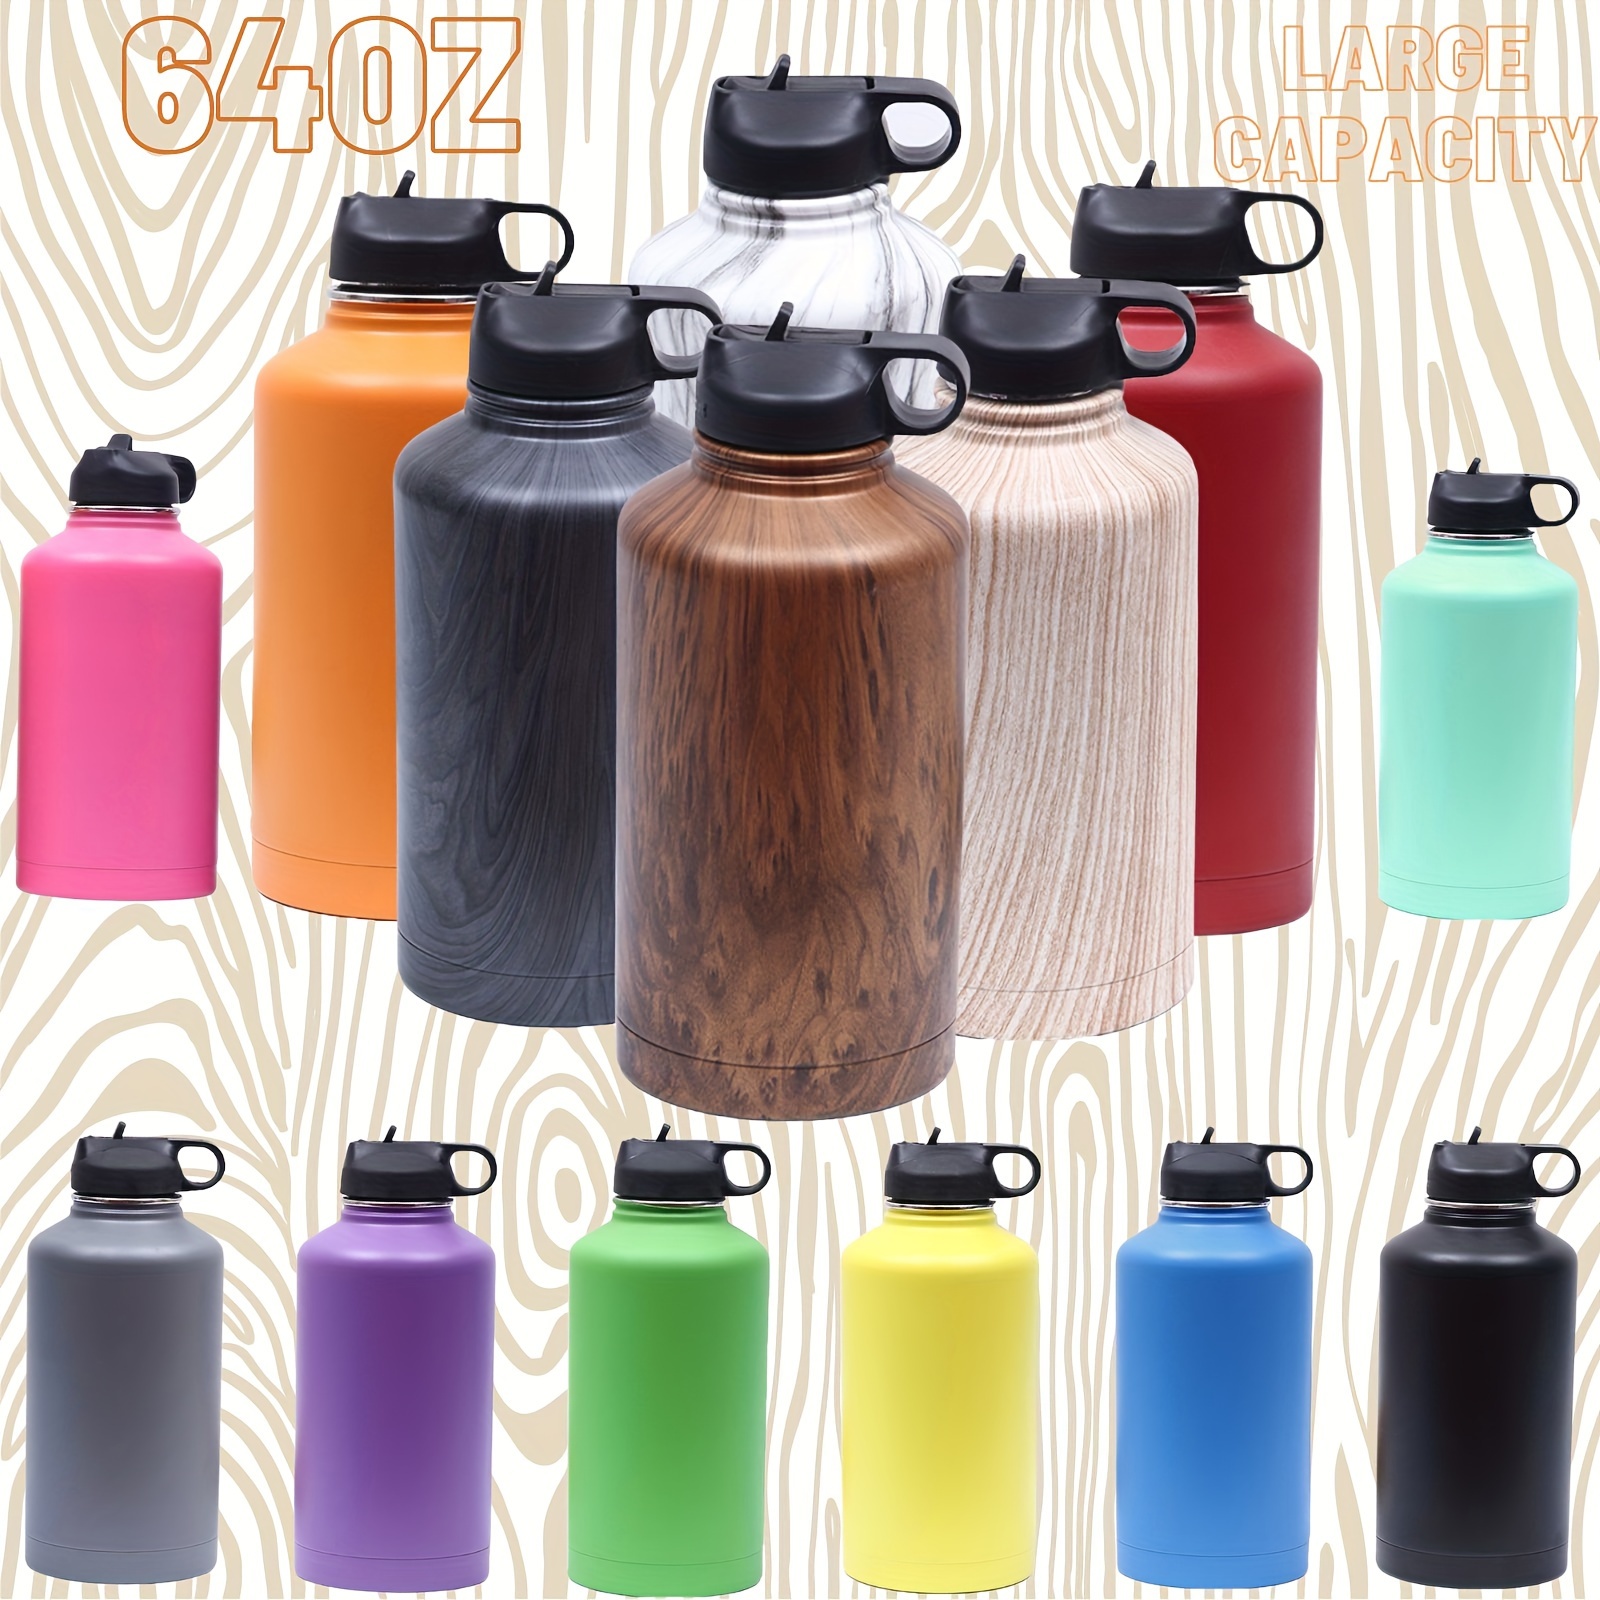 Air Up bottle pods : r/cork